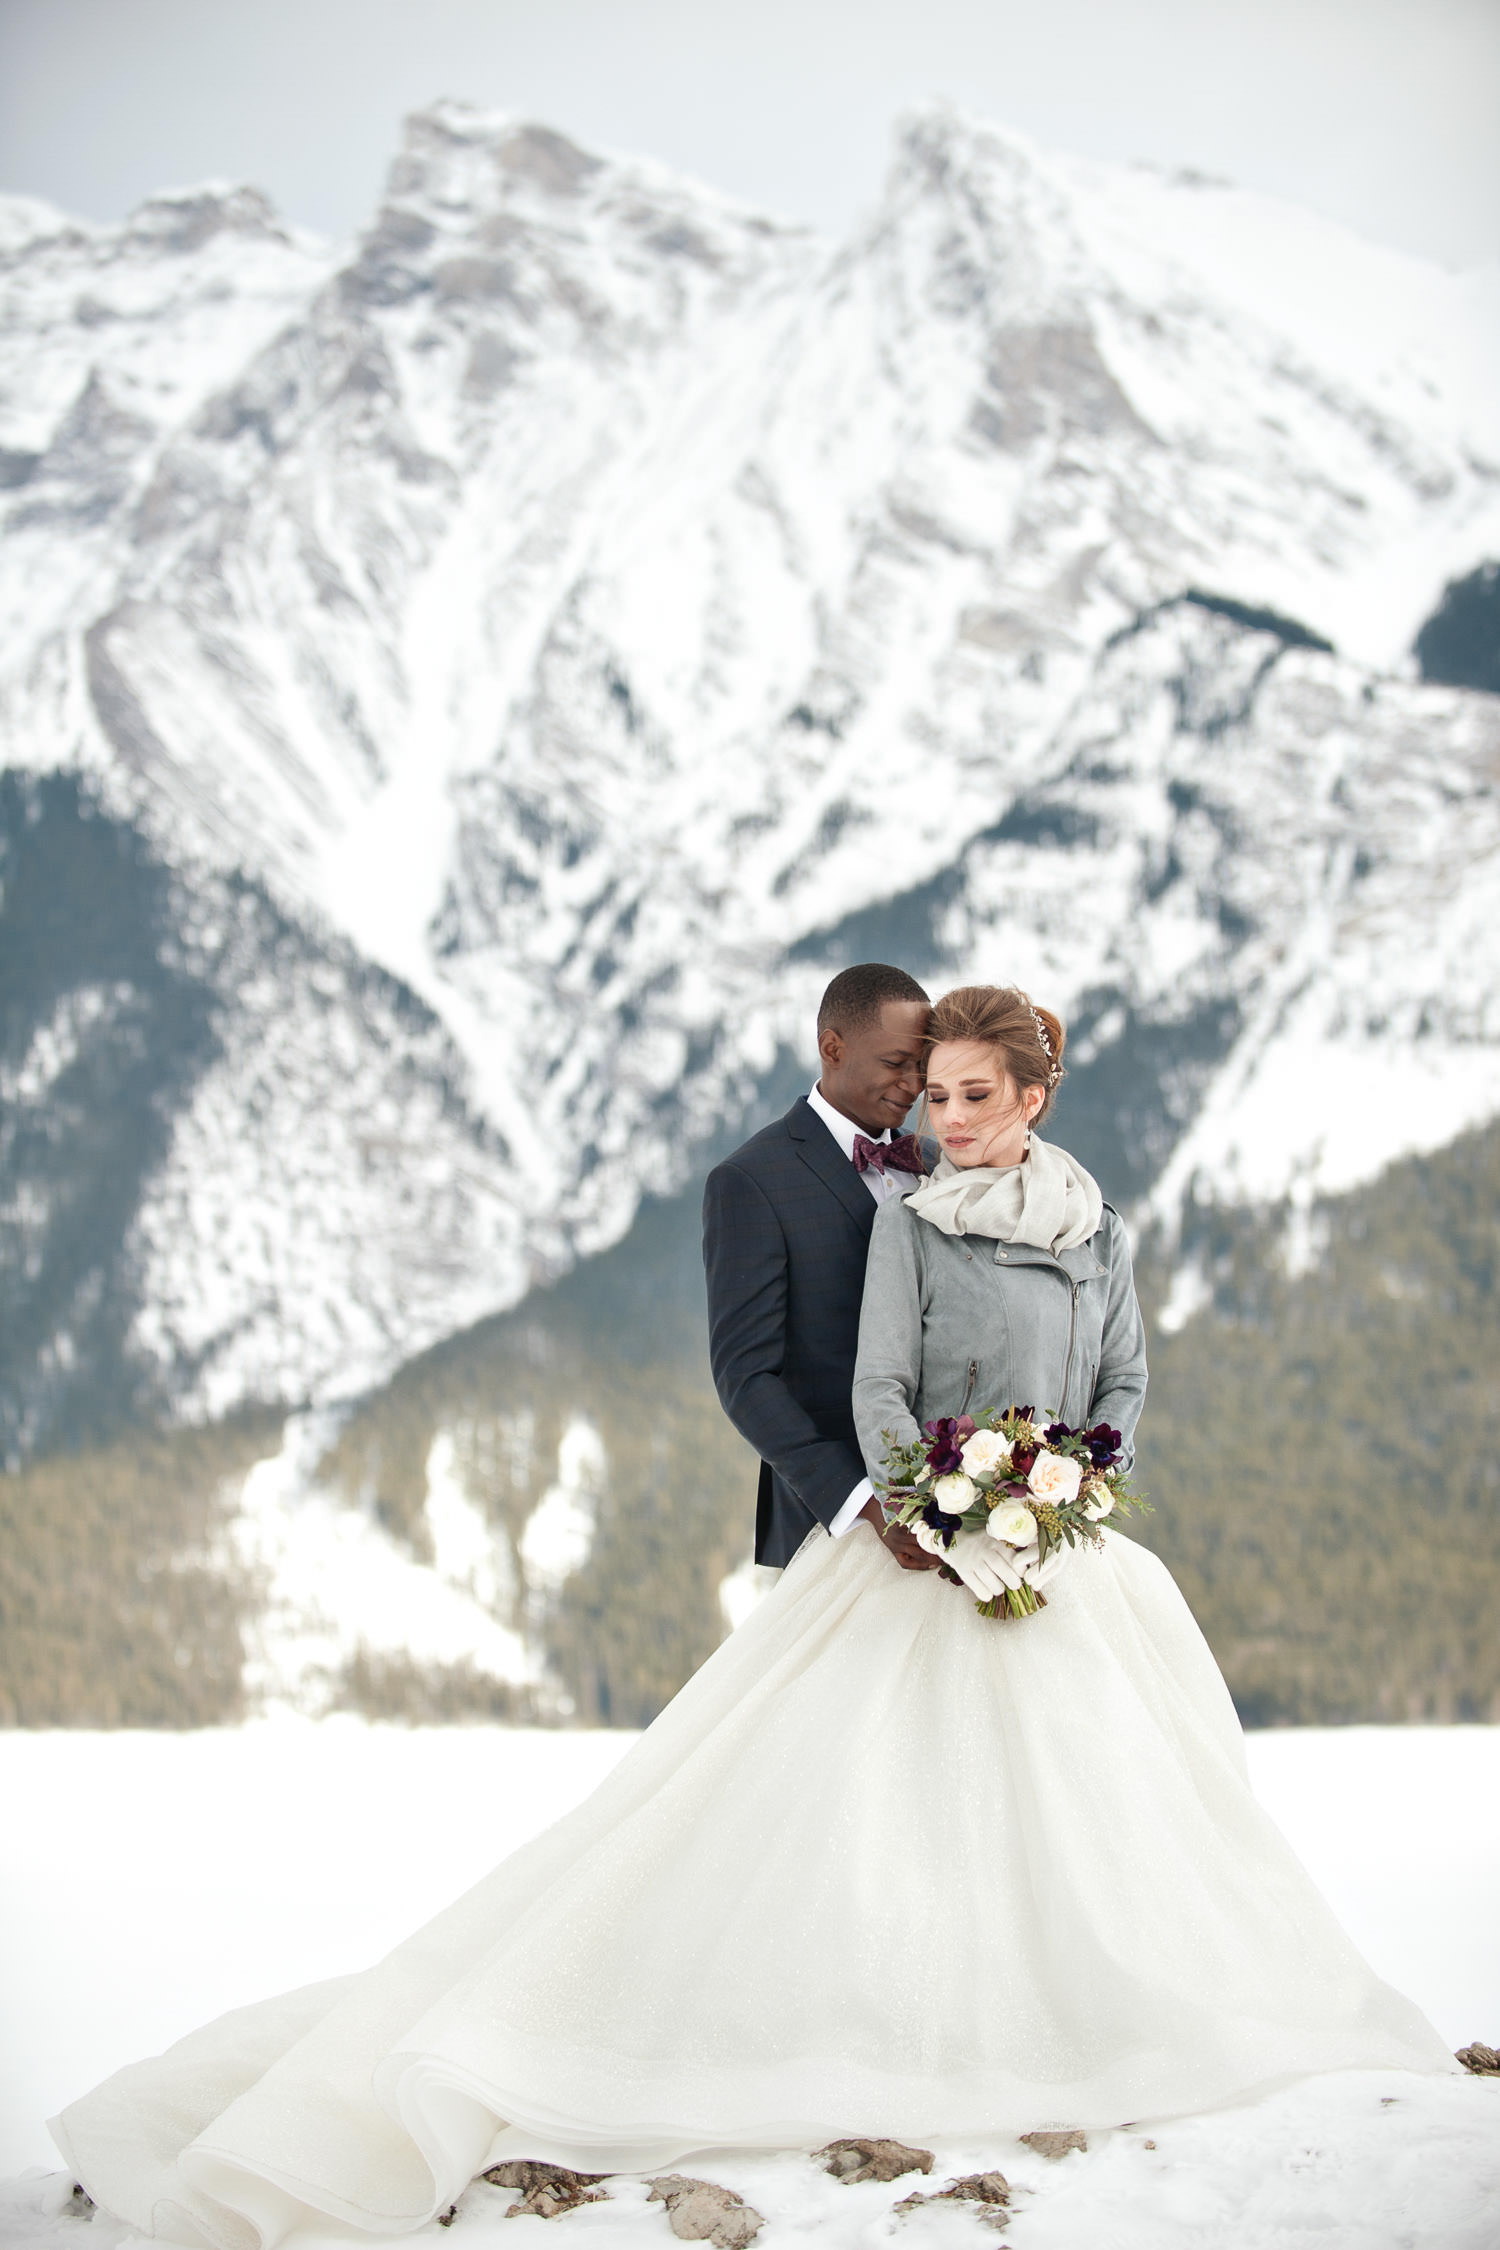 bride and groom during winter wedding photos at Lake Minnewanka captured by Tara Whittaker Photography